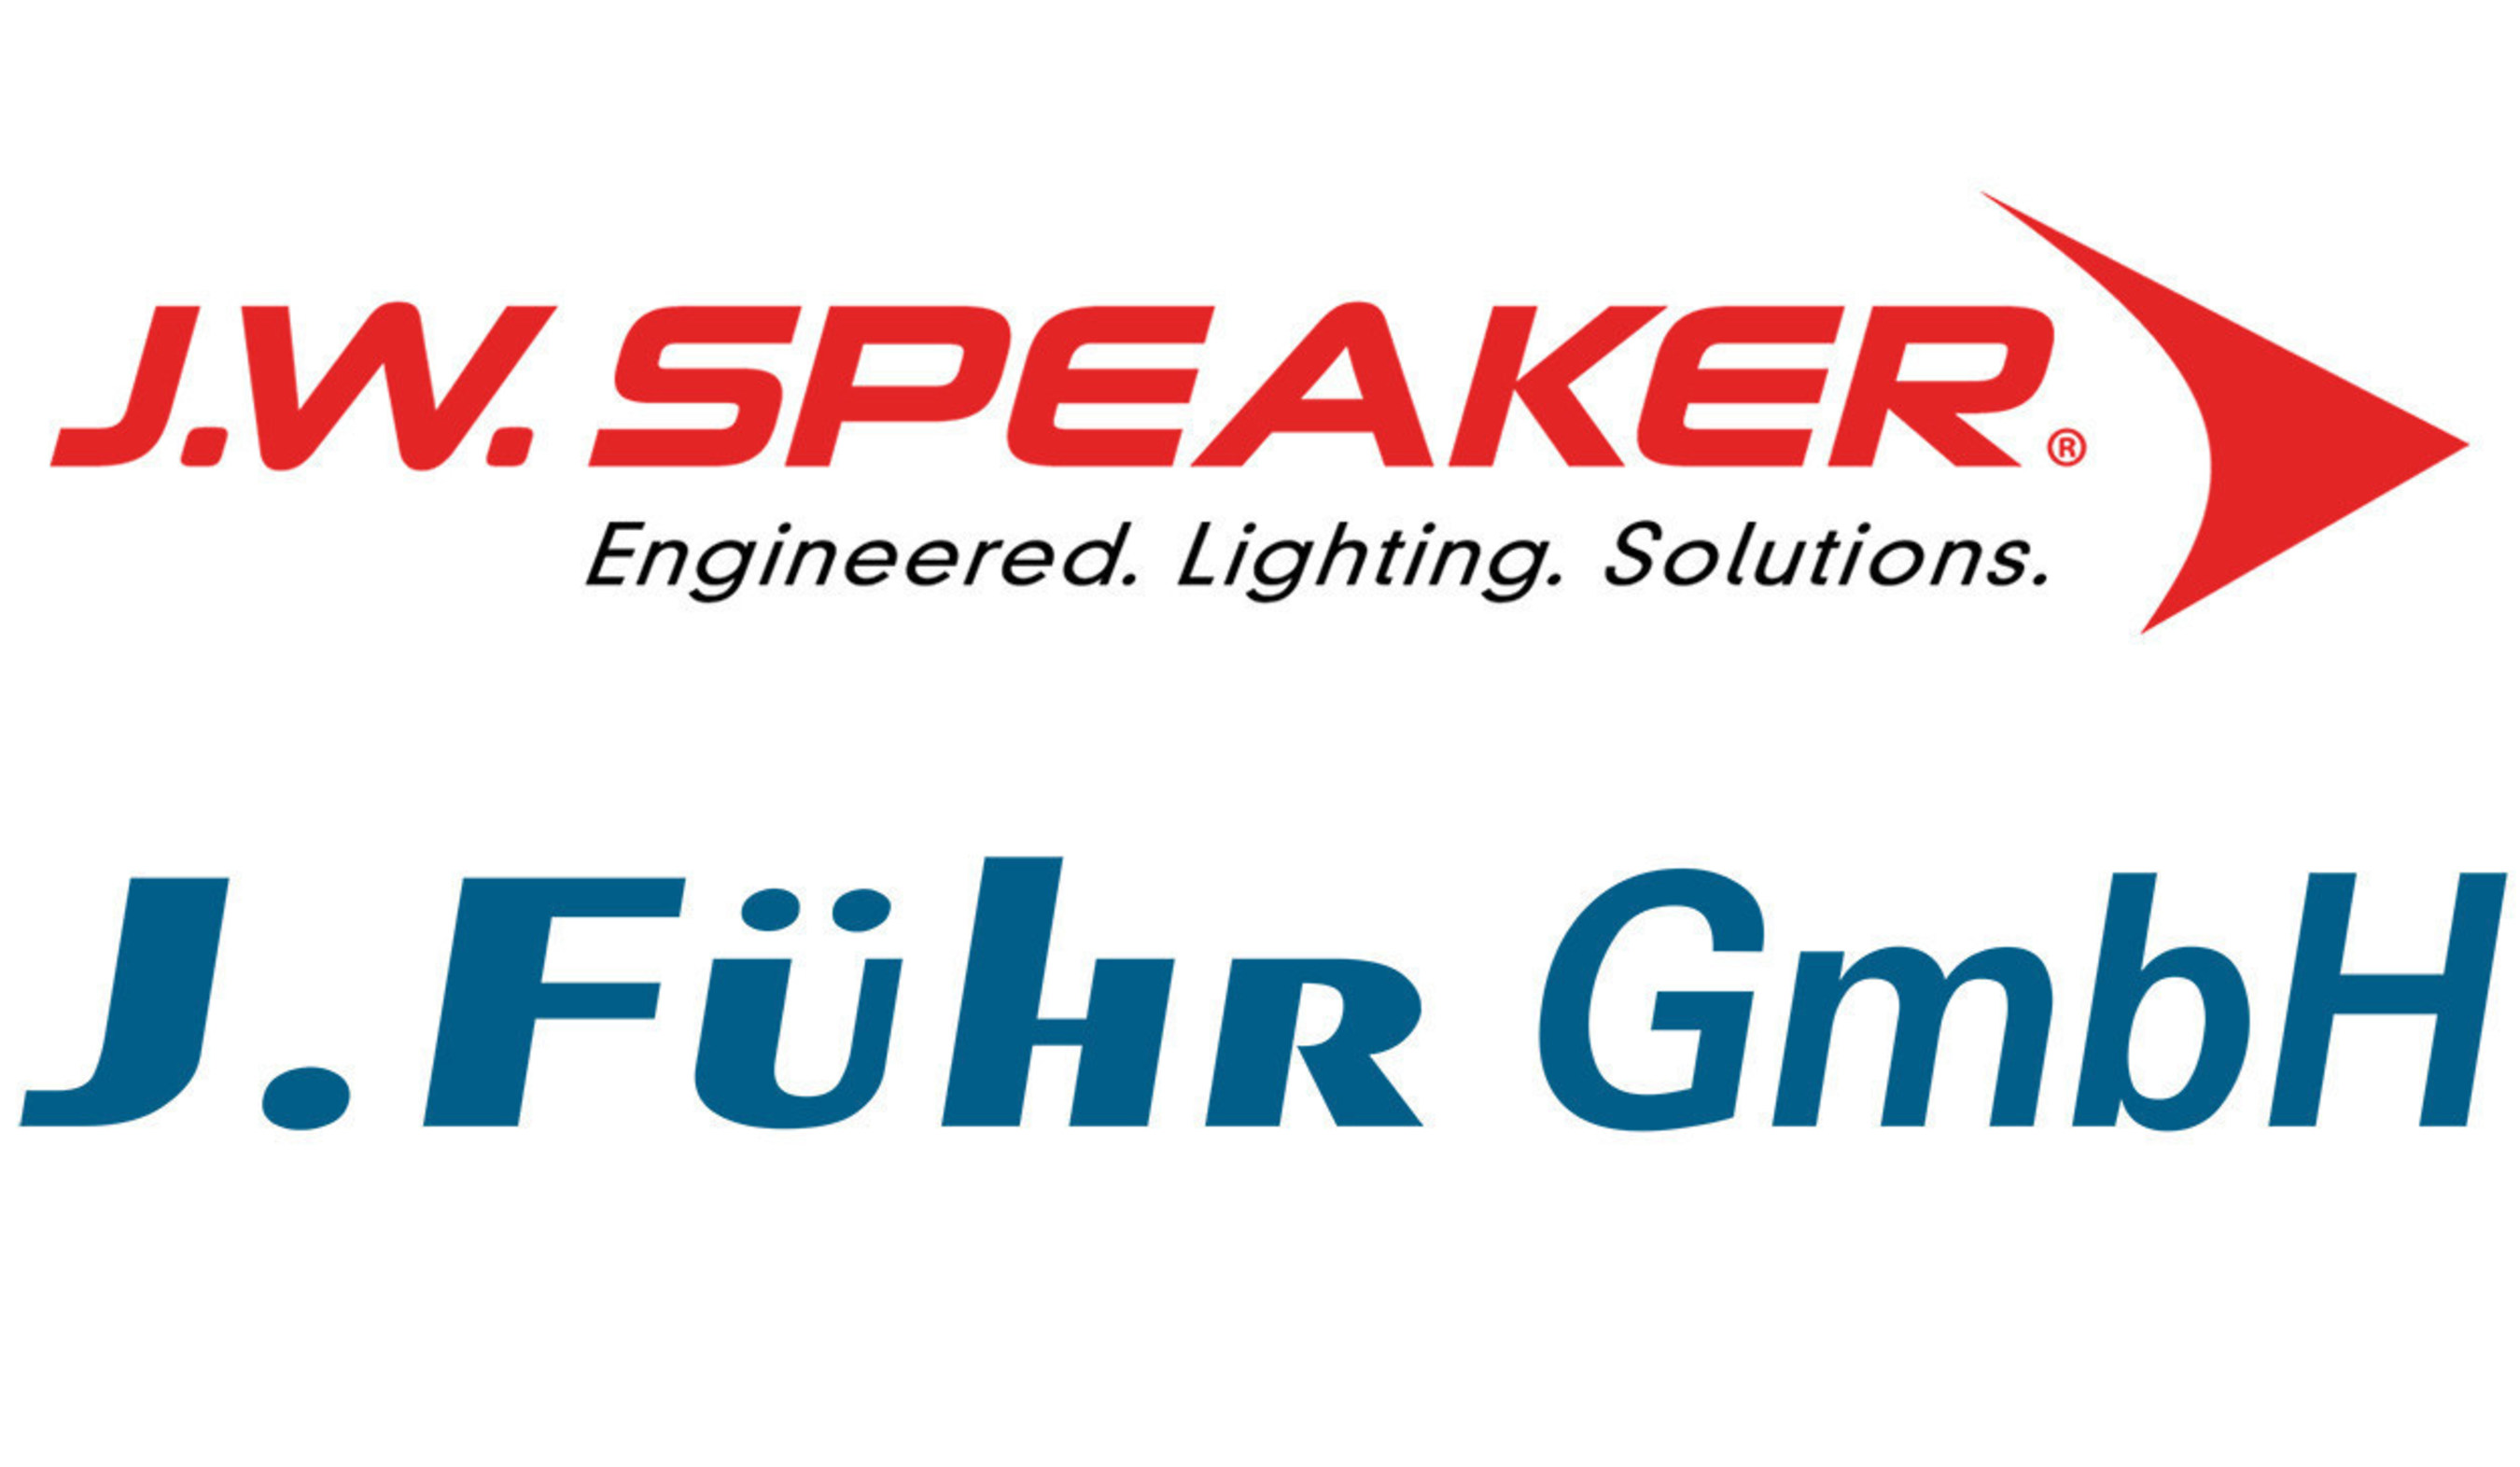 J.W. Speaker Corporation Announces Business Partnership with J.Fuehr GmbH